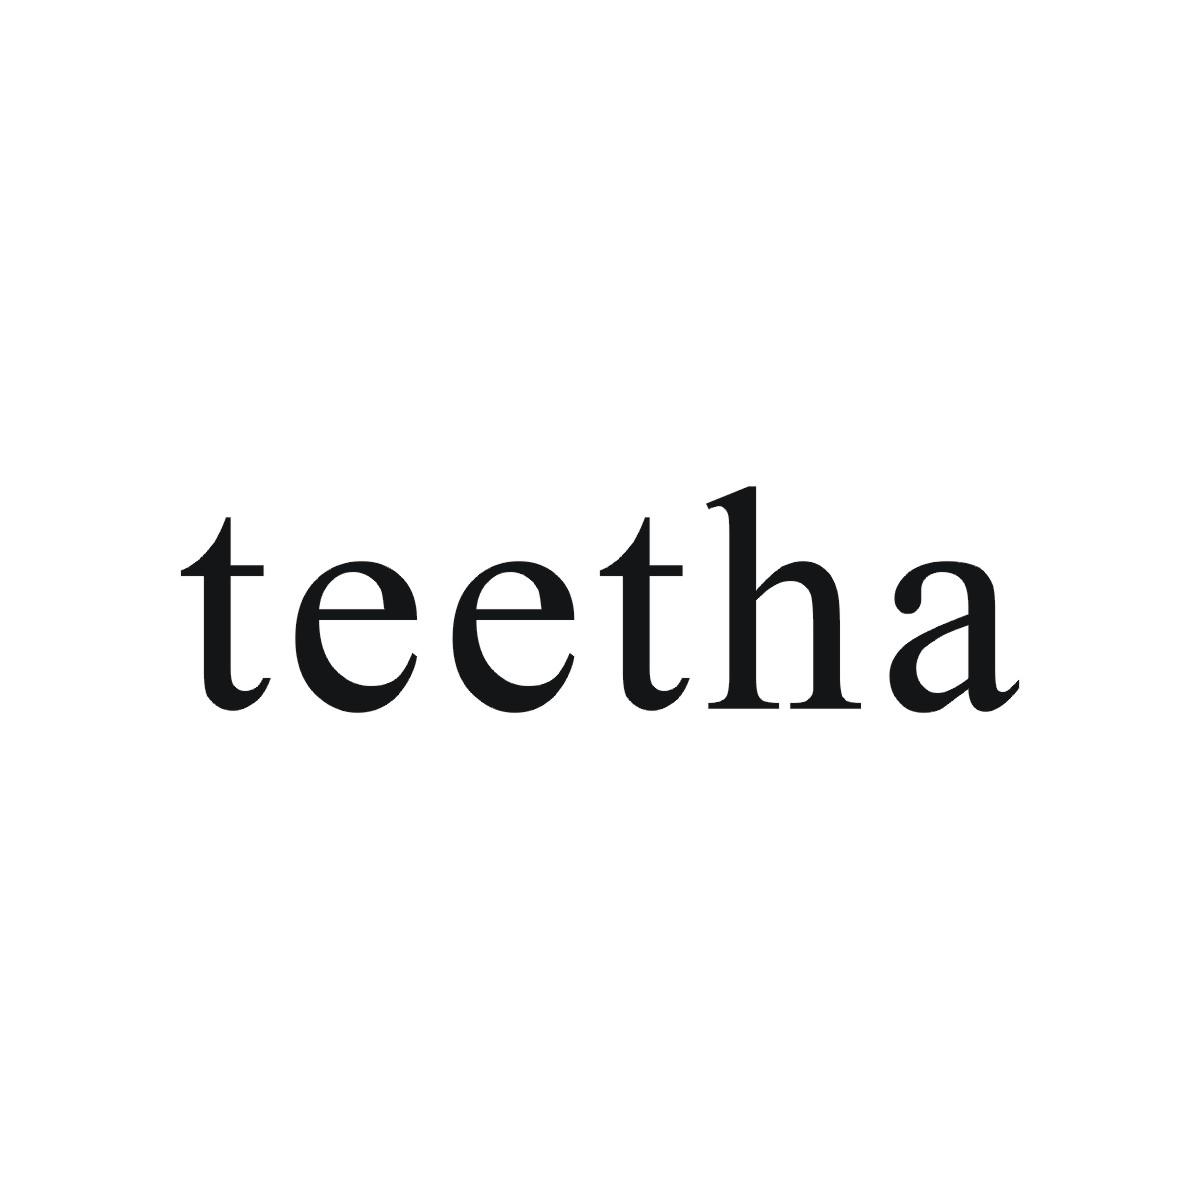 TEETHA出牙剂商标转让费用买卖交易流程